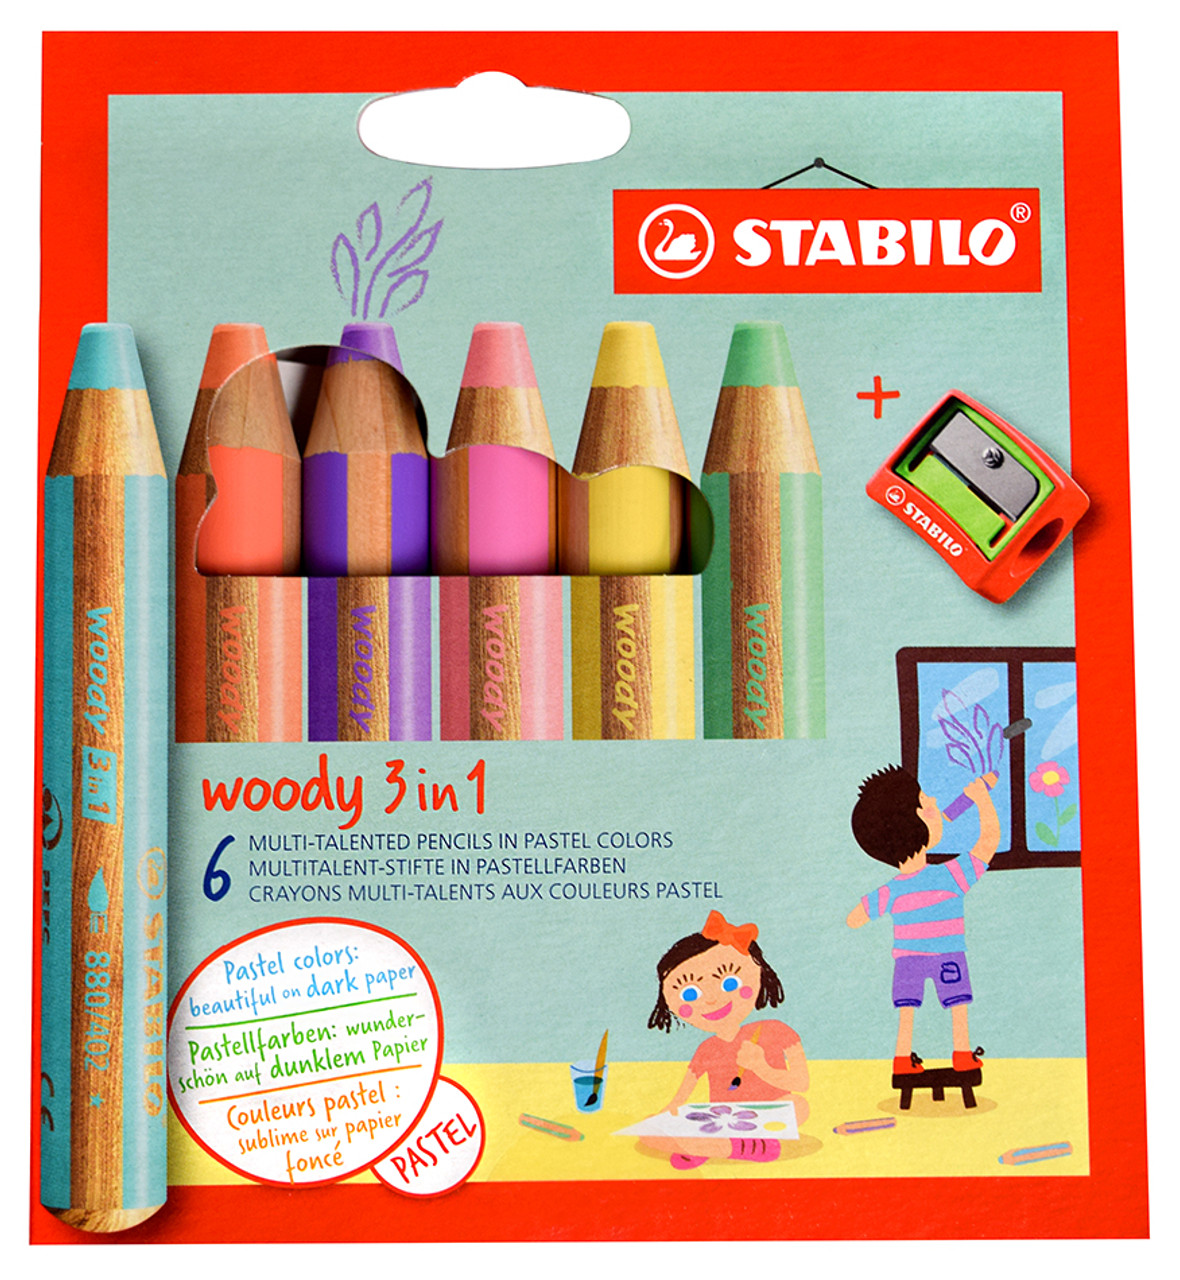 STABILO Woody 3-in-1 Set of 6 Pastel Colors w/Sharpener